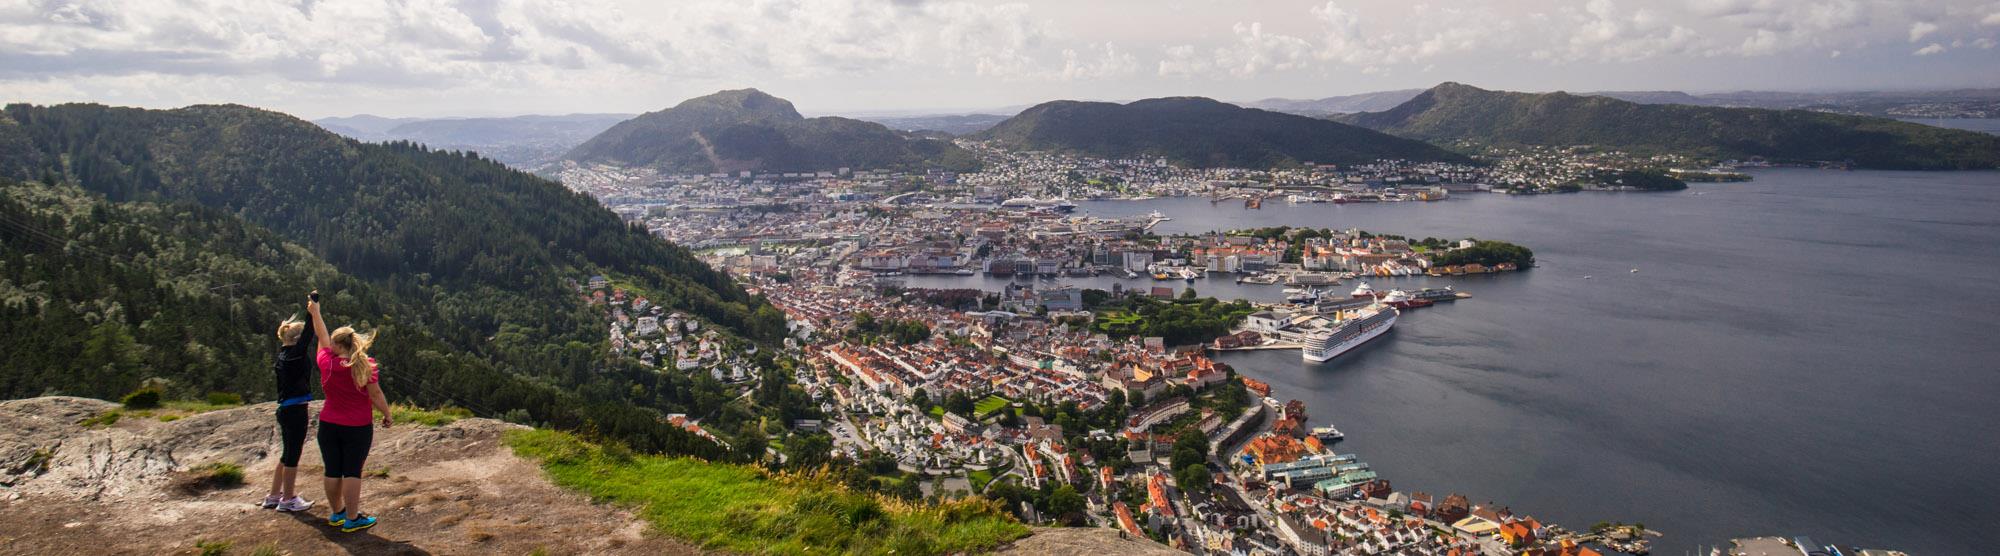 https://en.visitbergen.com/imageresizer/?image=%2Fdbimgs%2FStoltzekleiven-mountain-in-Bergen-Norway.jpg&action=Background_Overlay